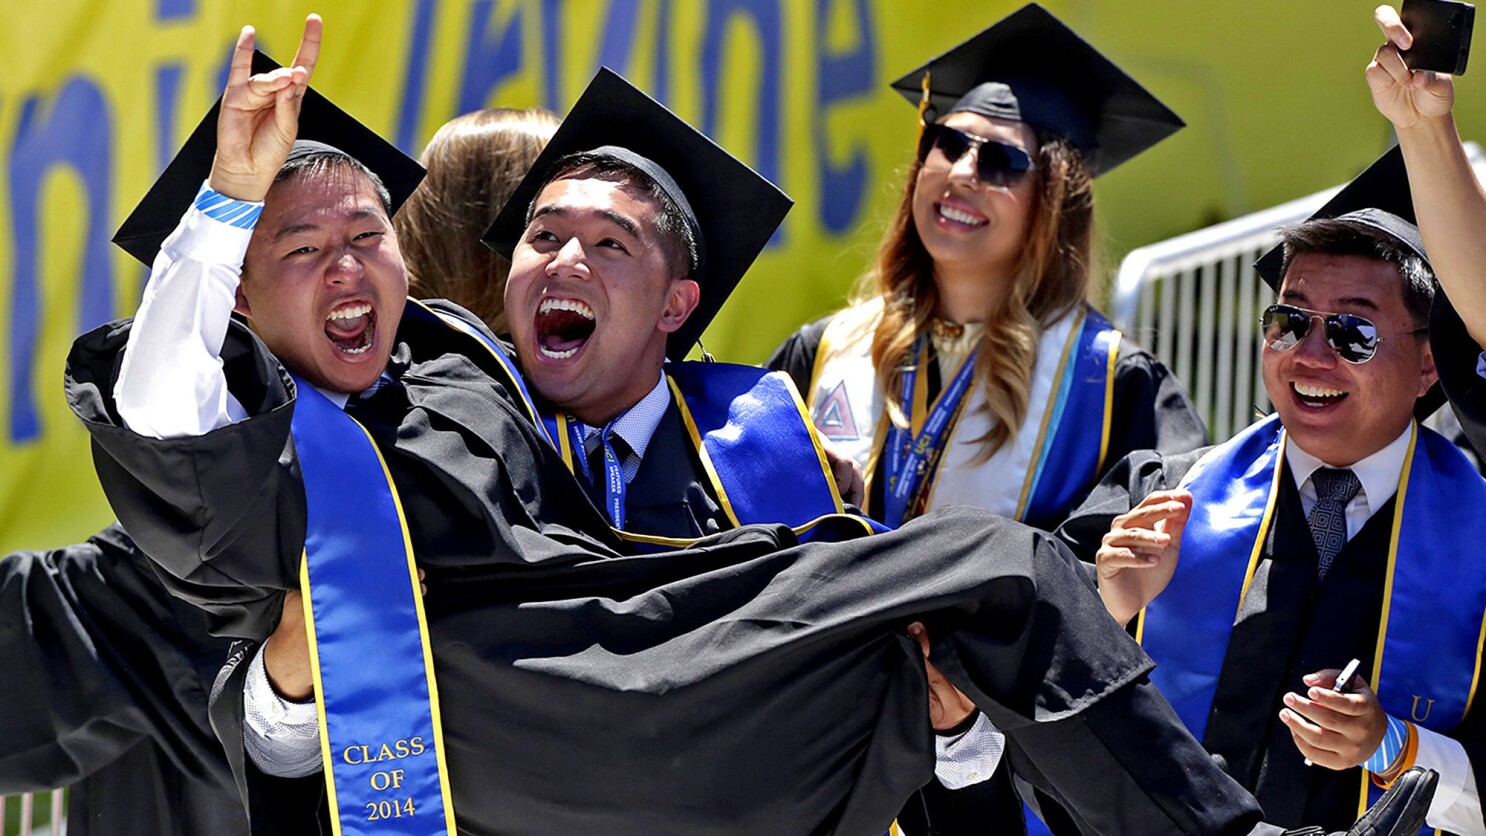 UC Irvine cancels graduation ceremonies due to coronavirus - Los Angeles  Times